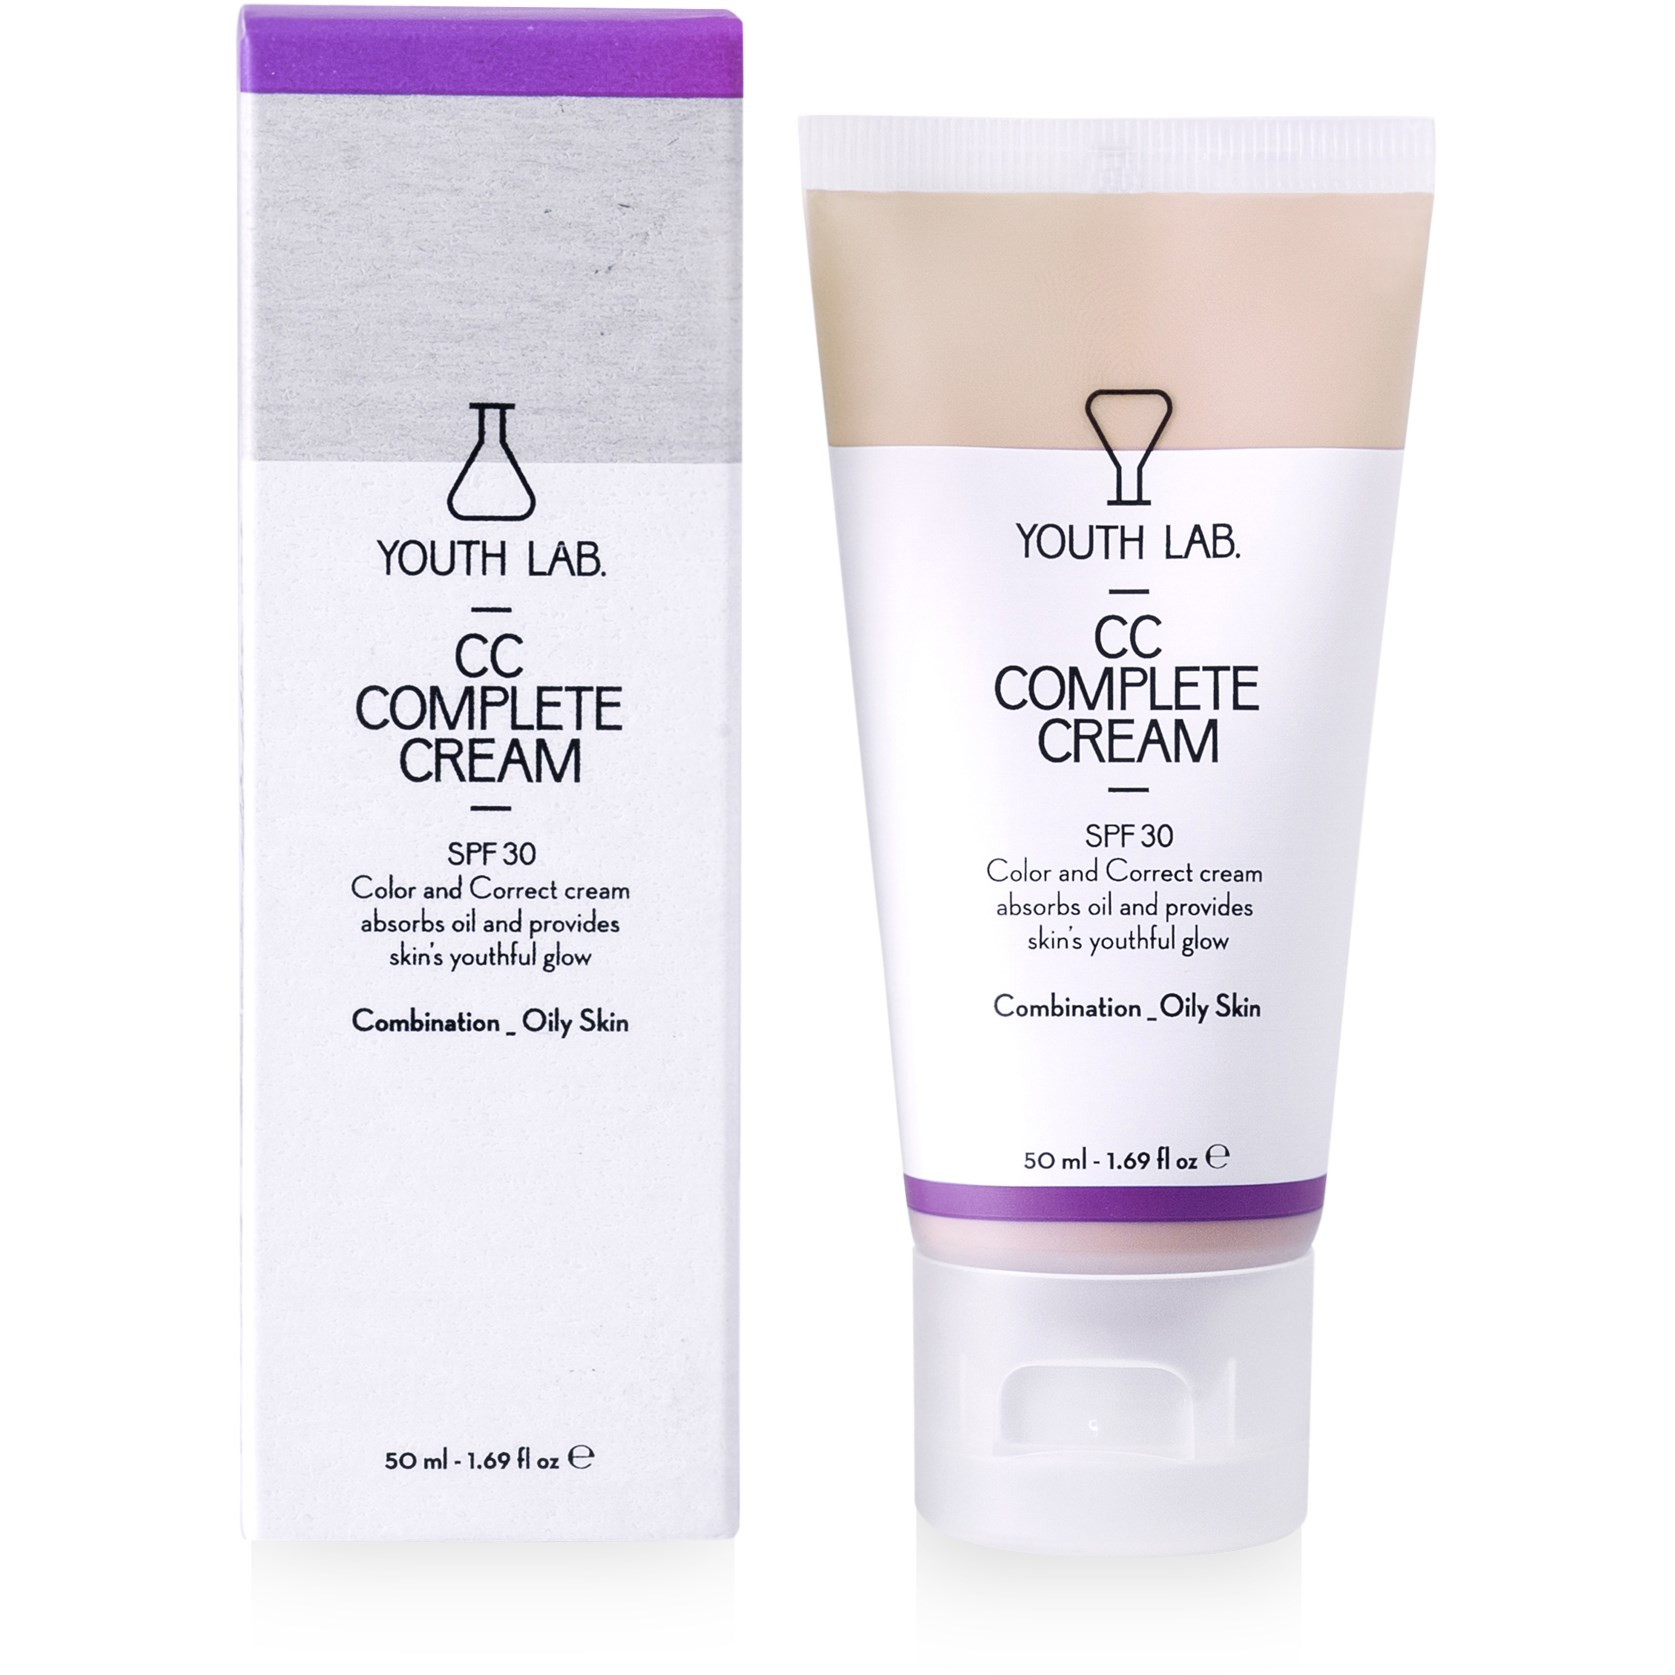 Youth Lab CC Complete Cream Spf 30 Oily Skin 50 ml